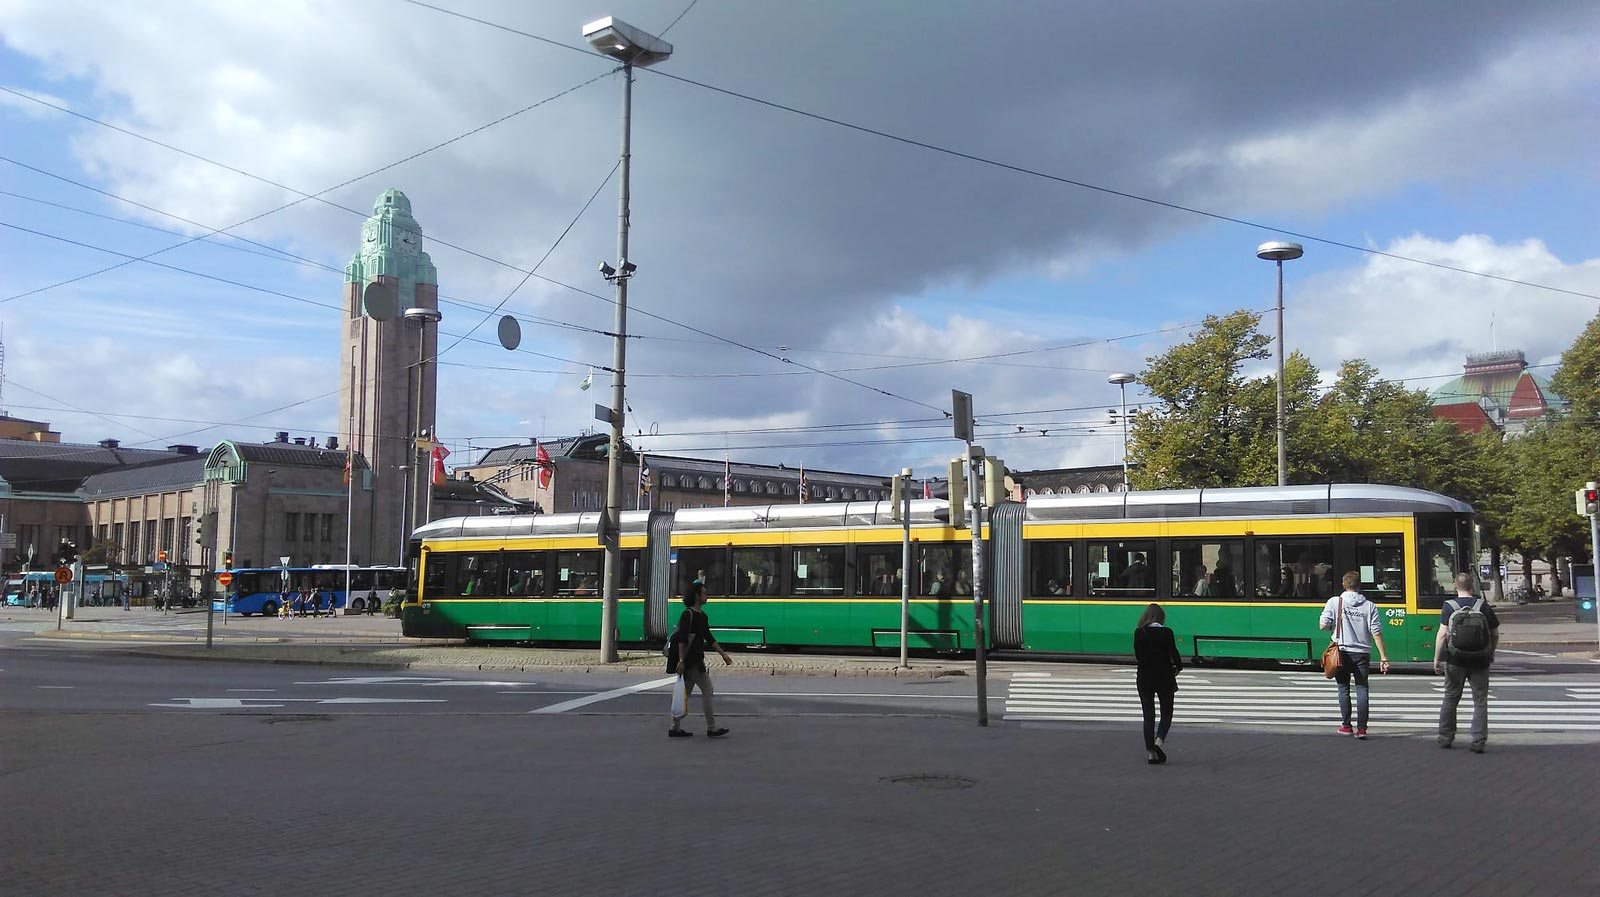 Helsinki street view - Main railway station and tram